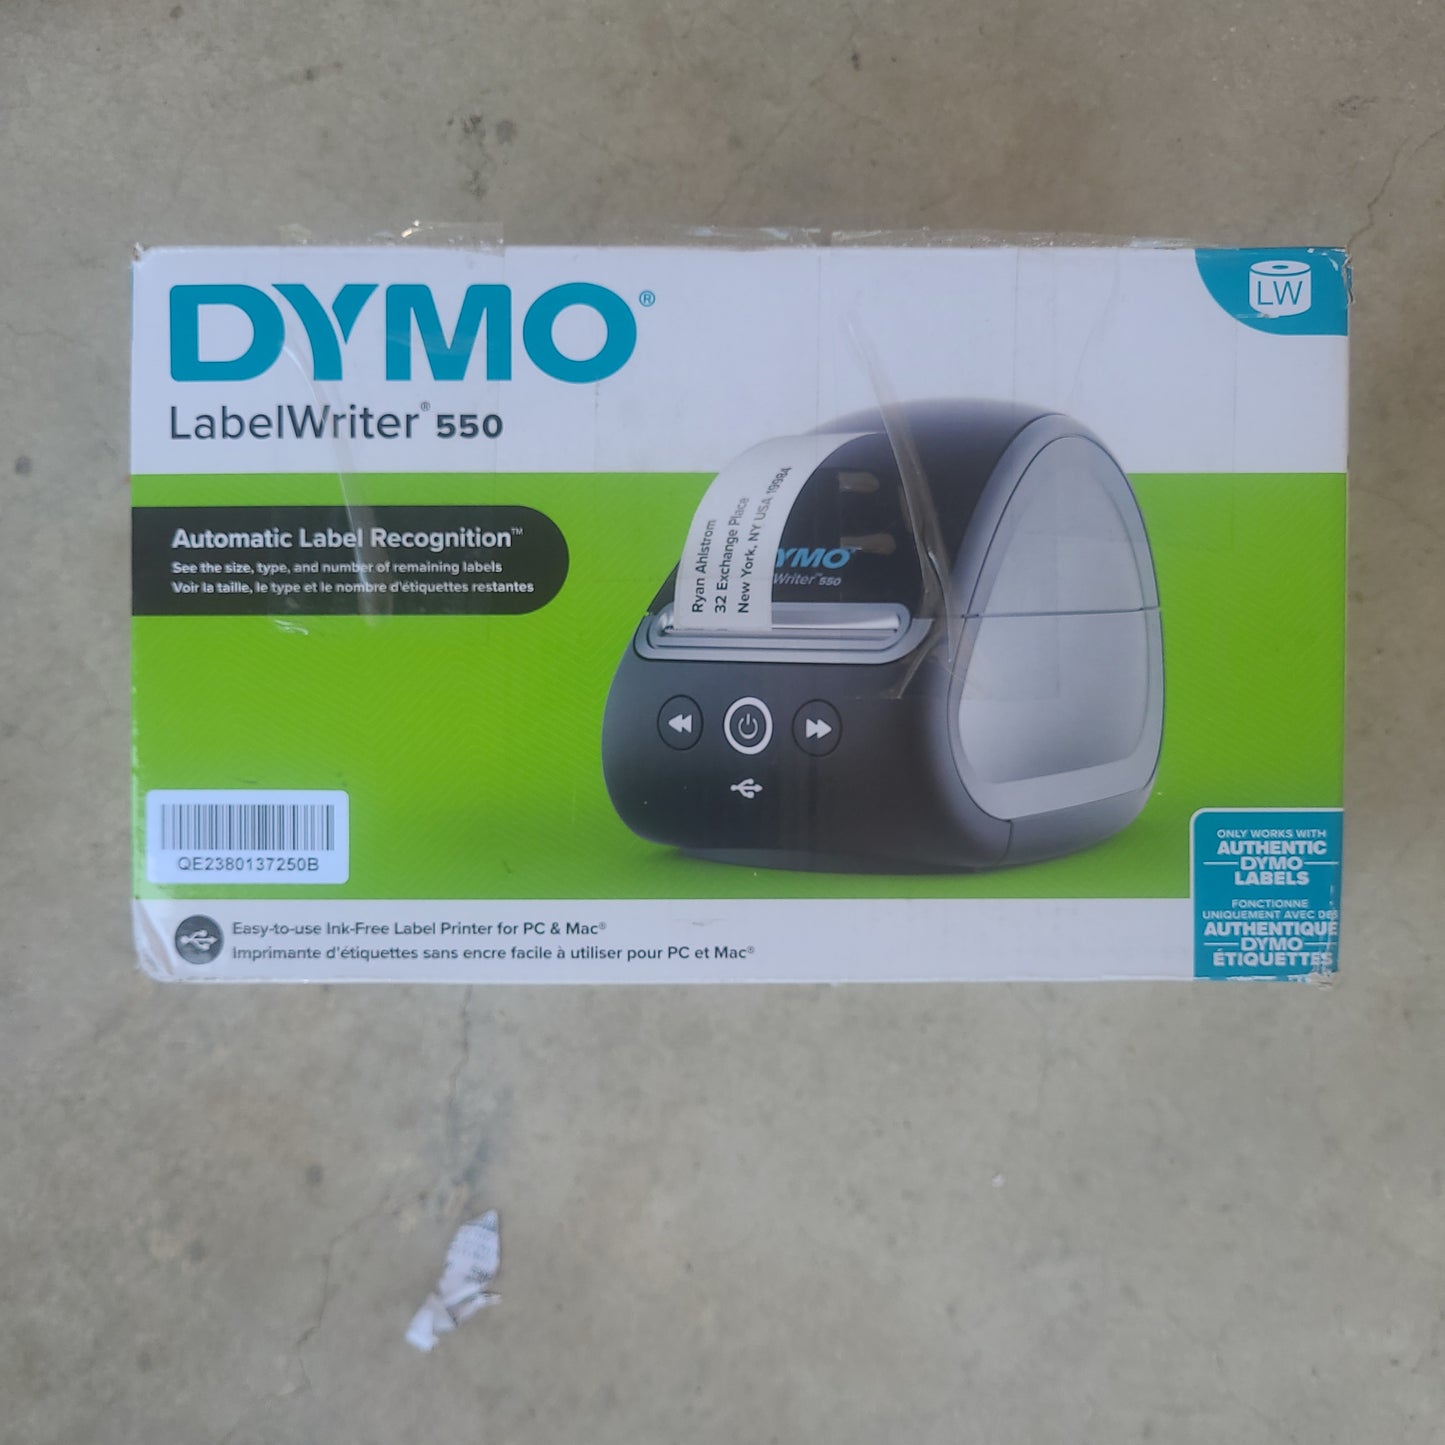 Dymo labelwriter 550